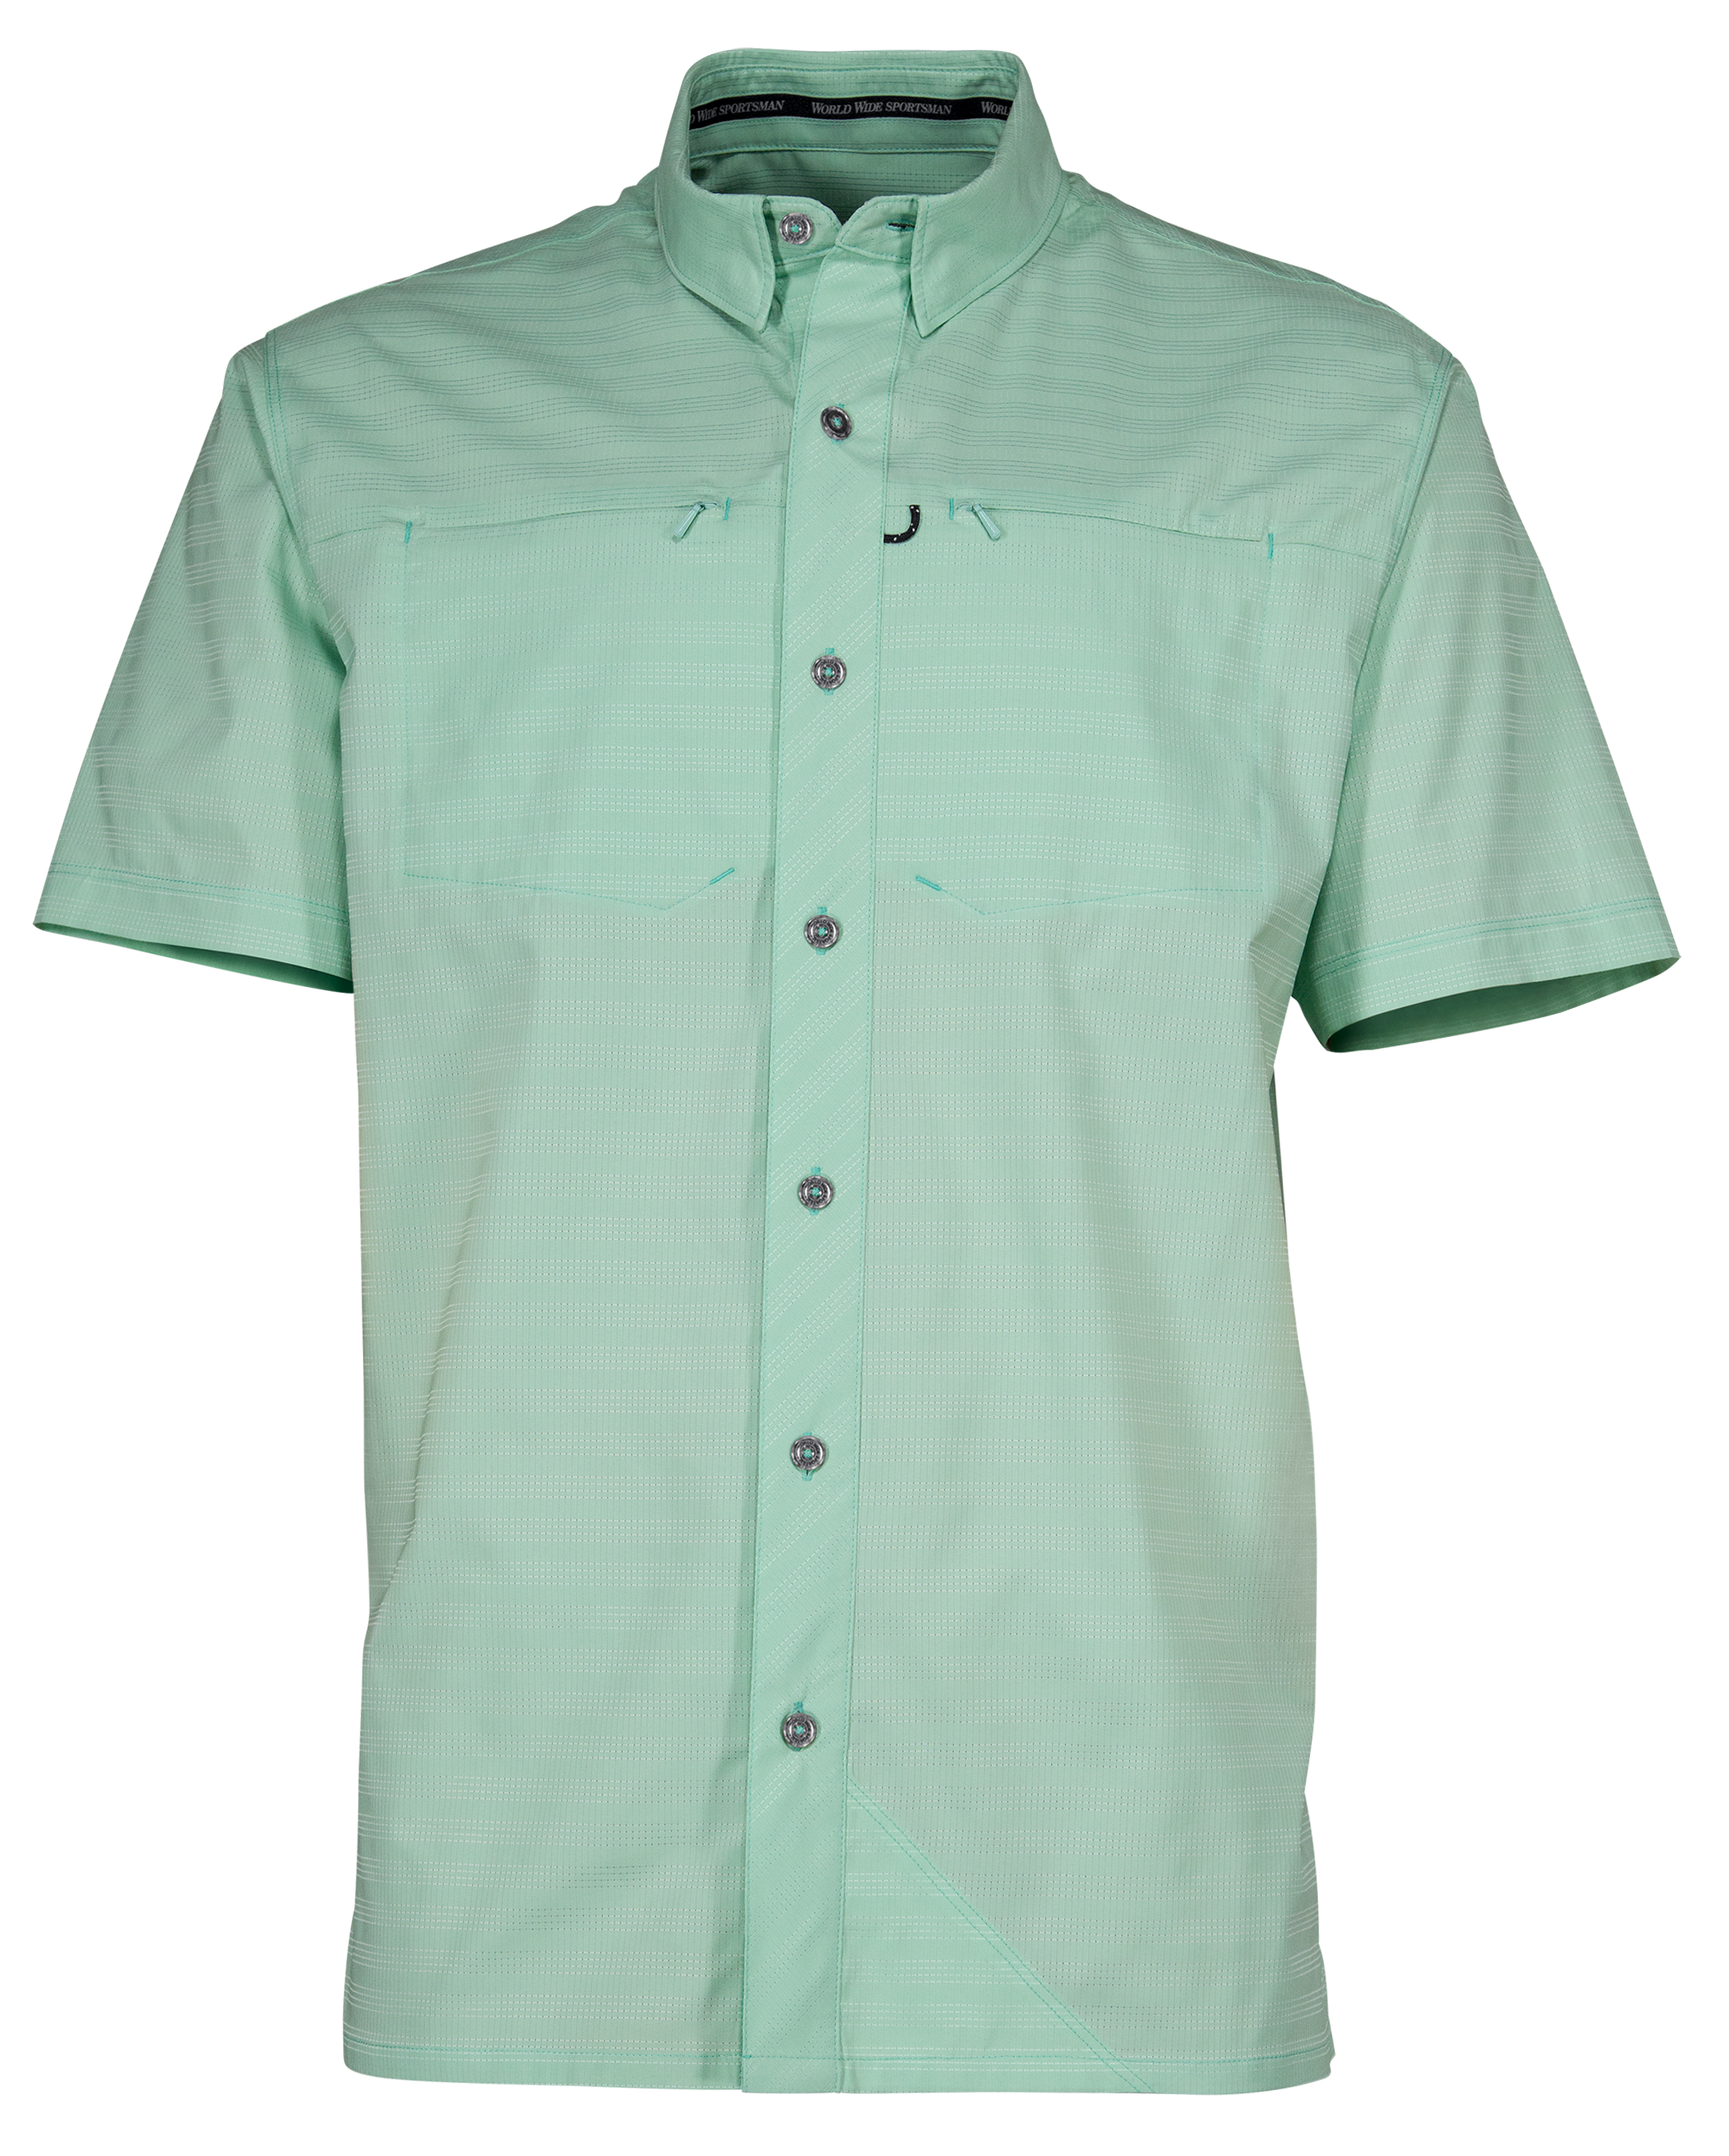 World Wide Sportsman Seacrest 2-Pocket Short-Sleeve Button-Down Shirt for Men - Lichen - L